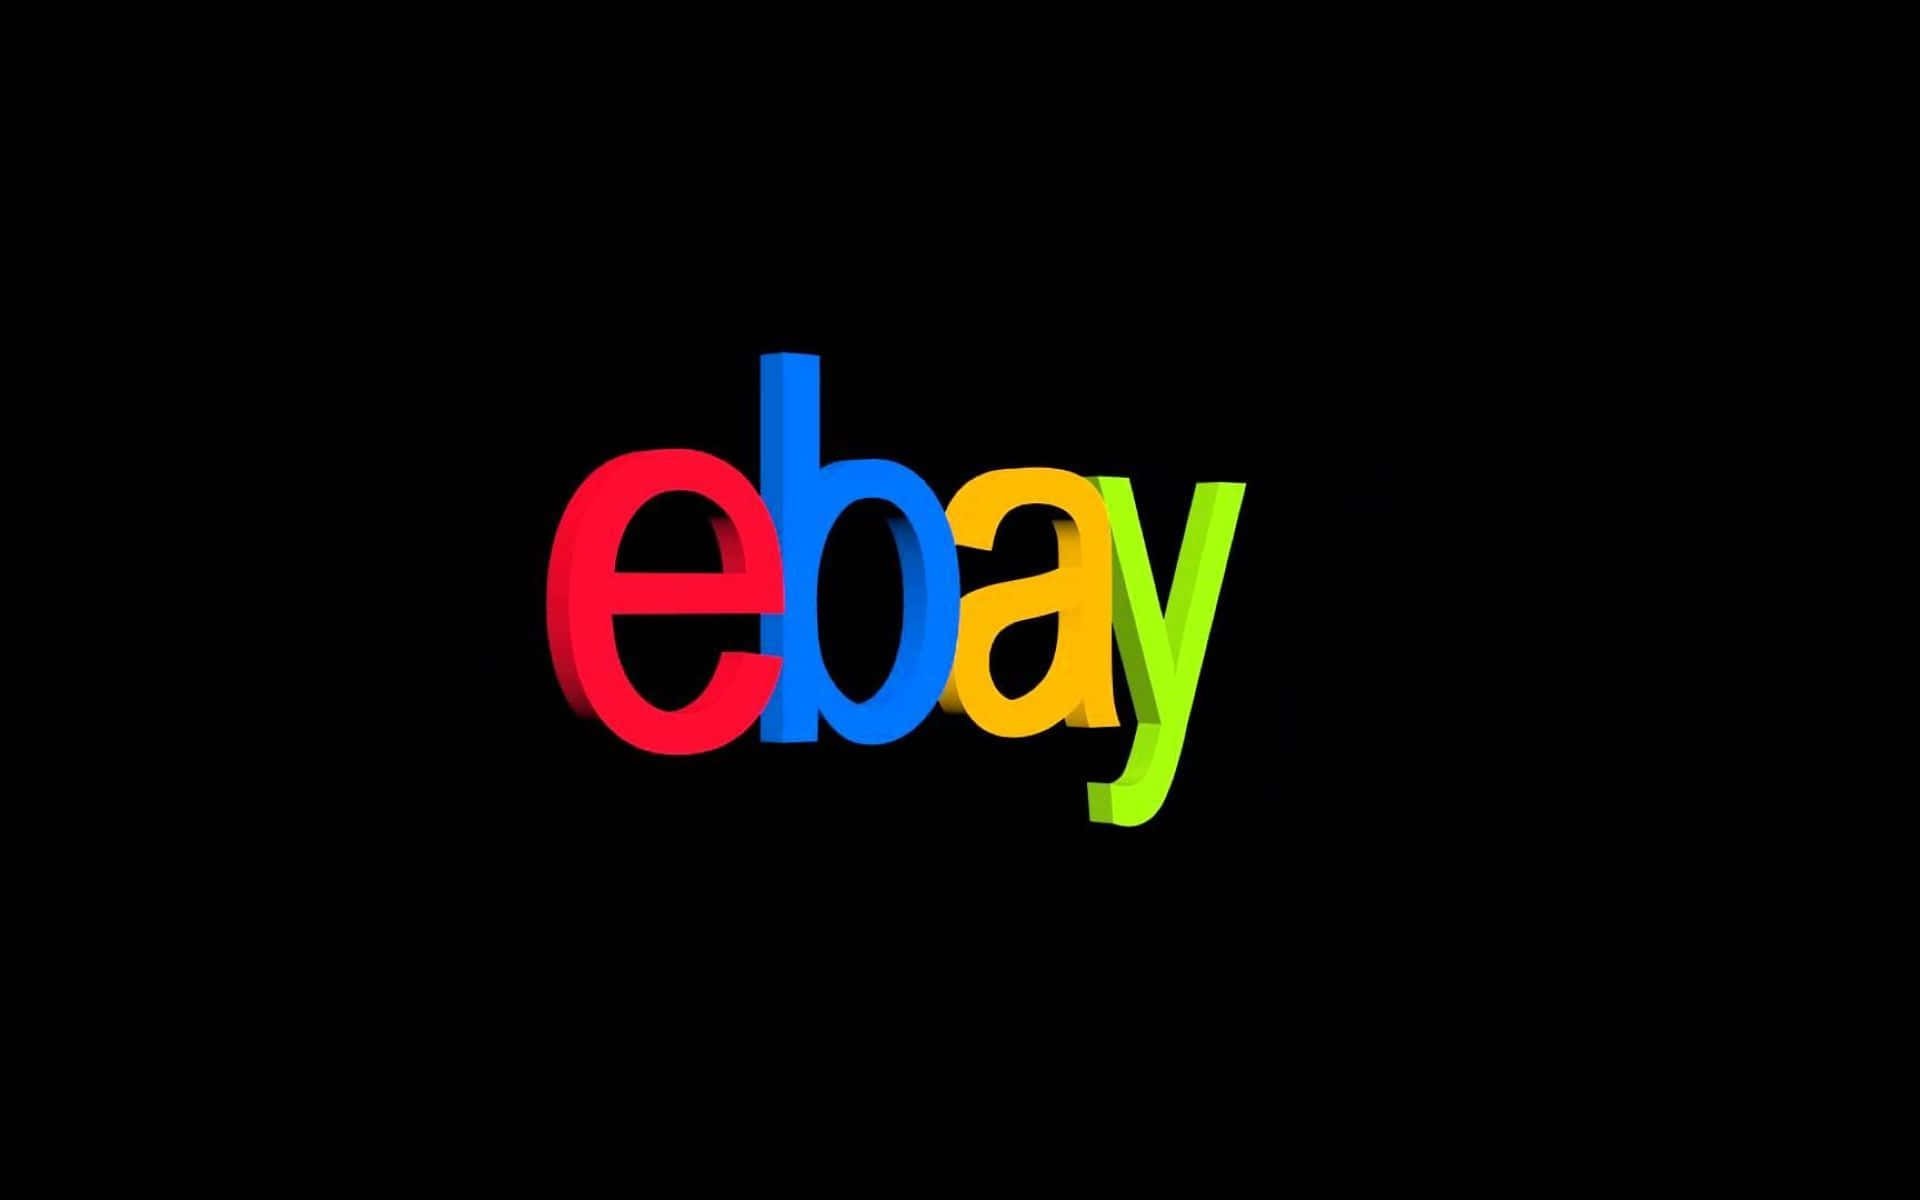 3debay Uk Logo = 3d Ebay Uk-logotypen Wallpaper